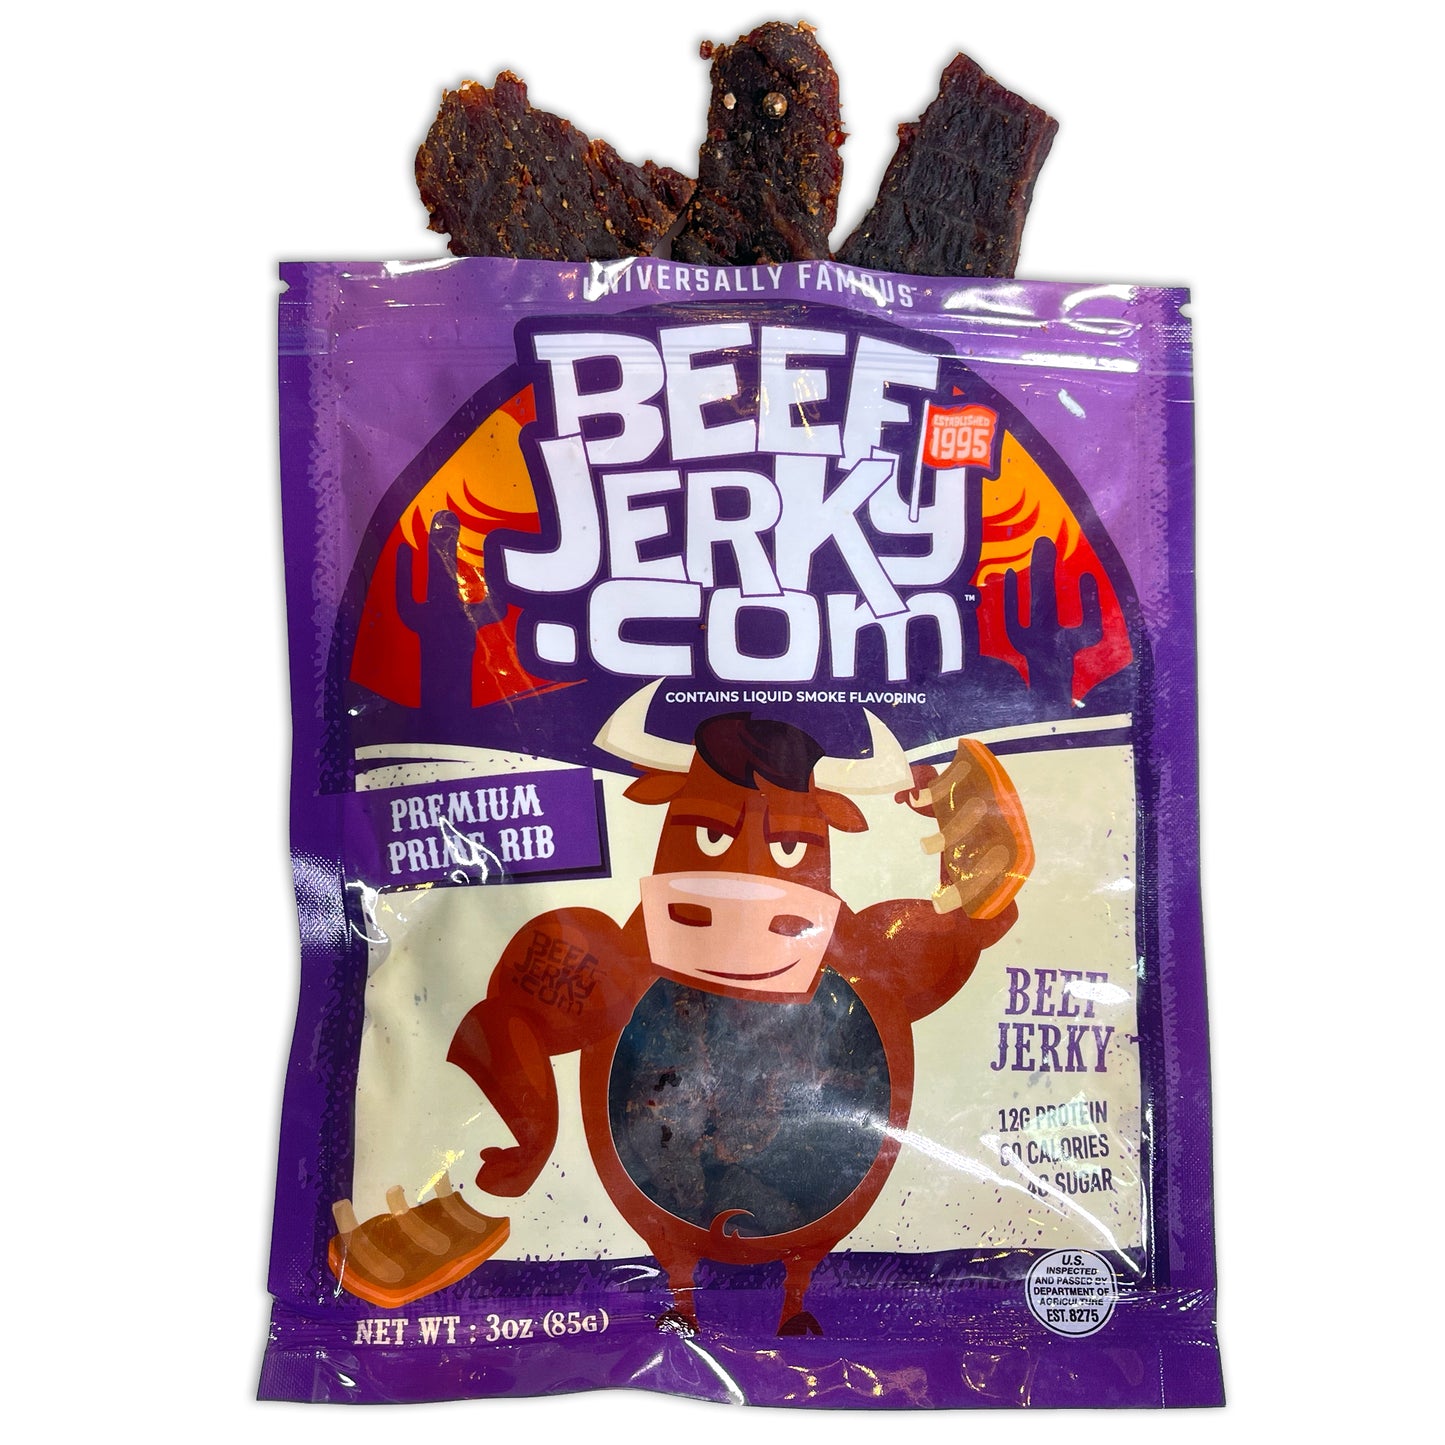 Premium Prime Rib Beef Jerky (3oz bag)